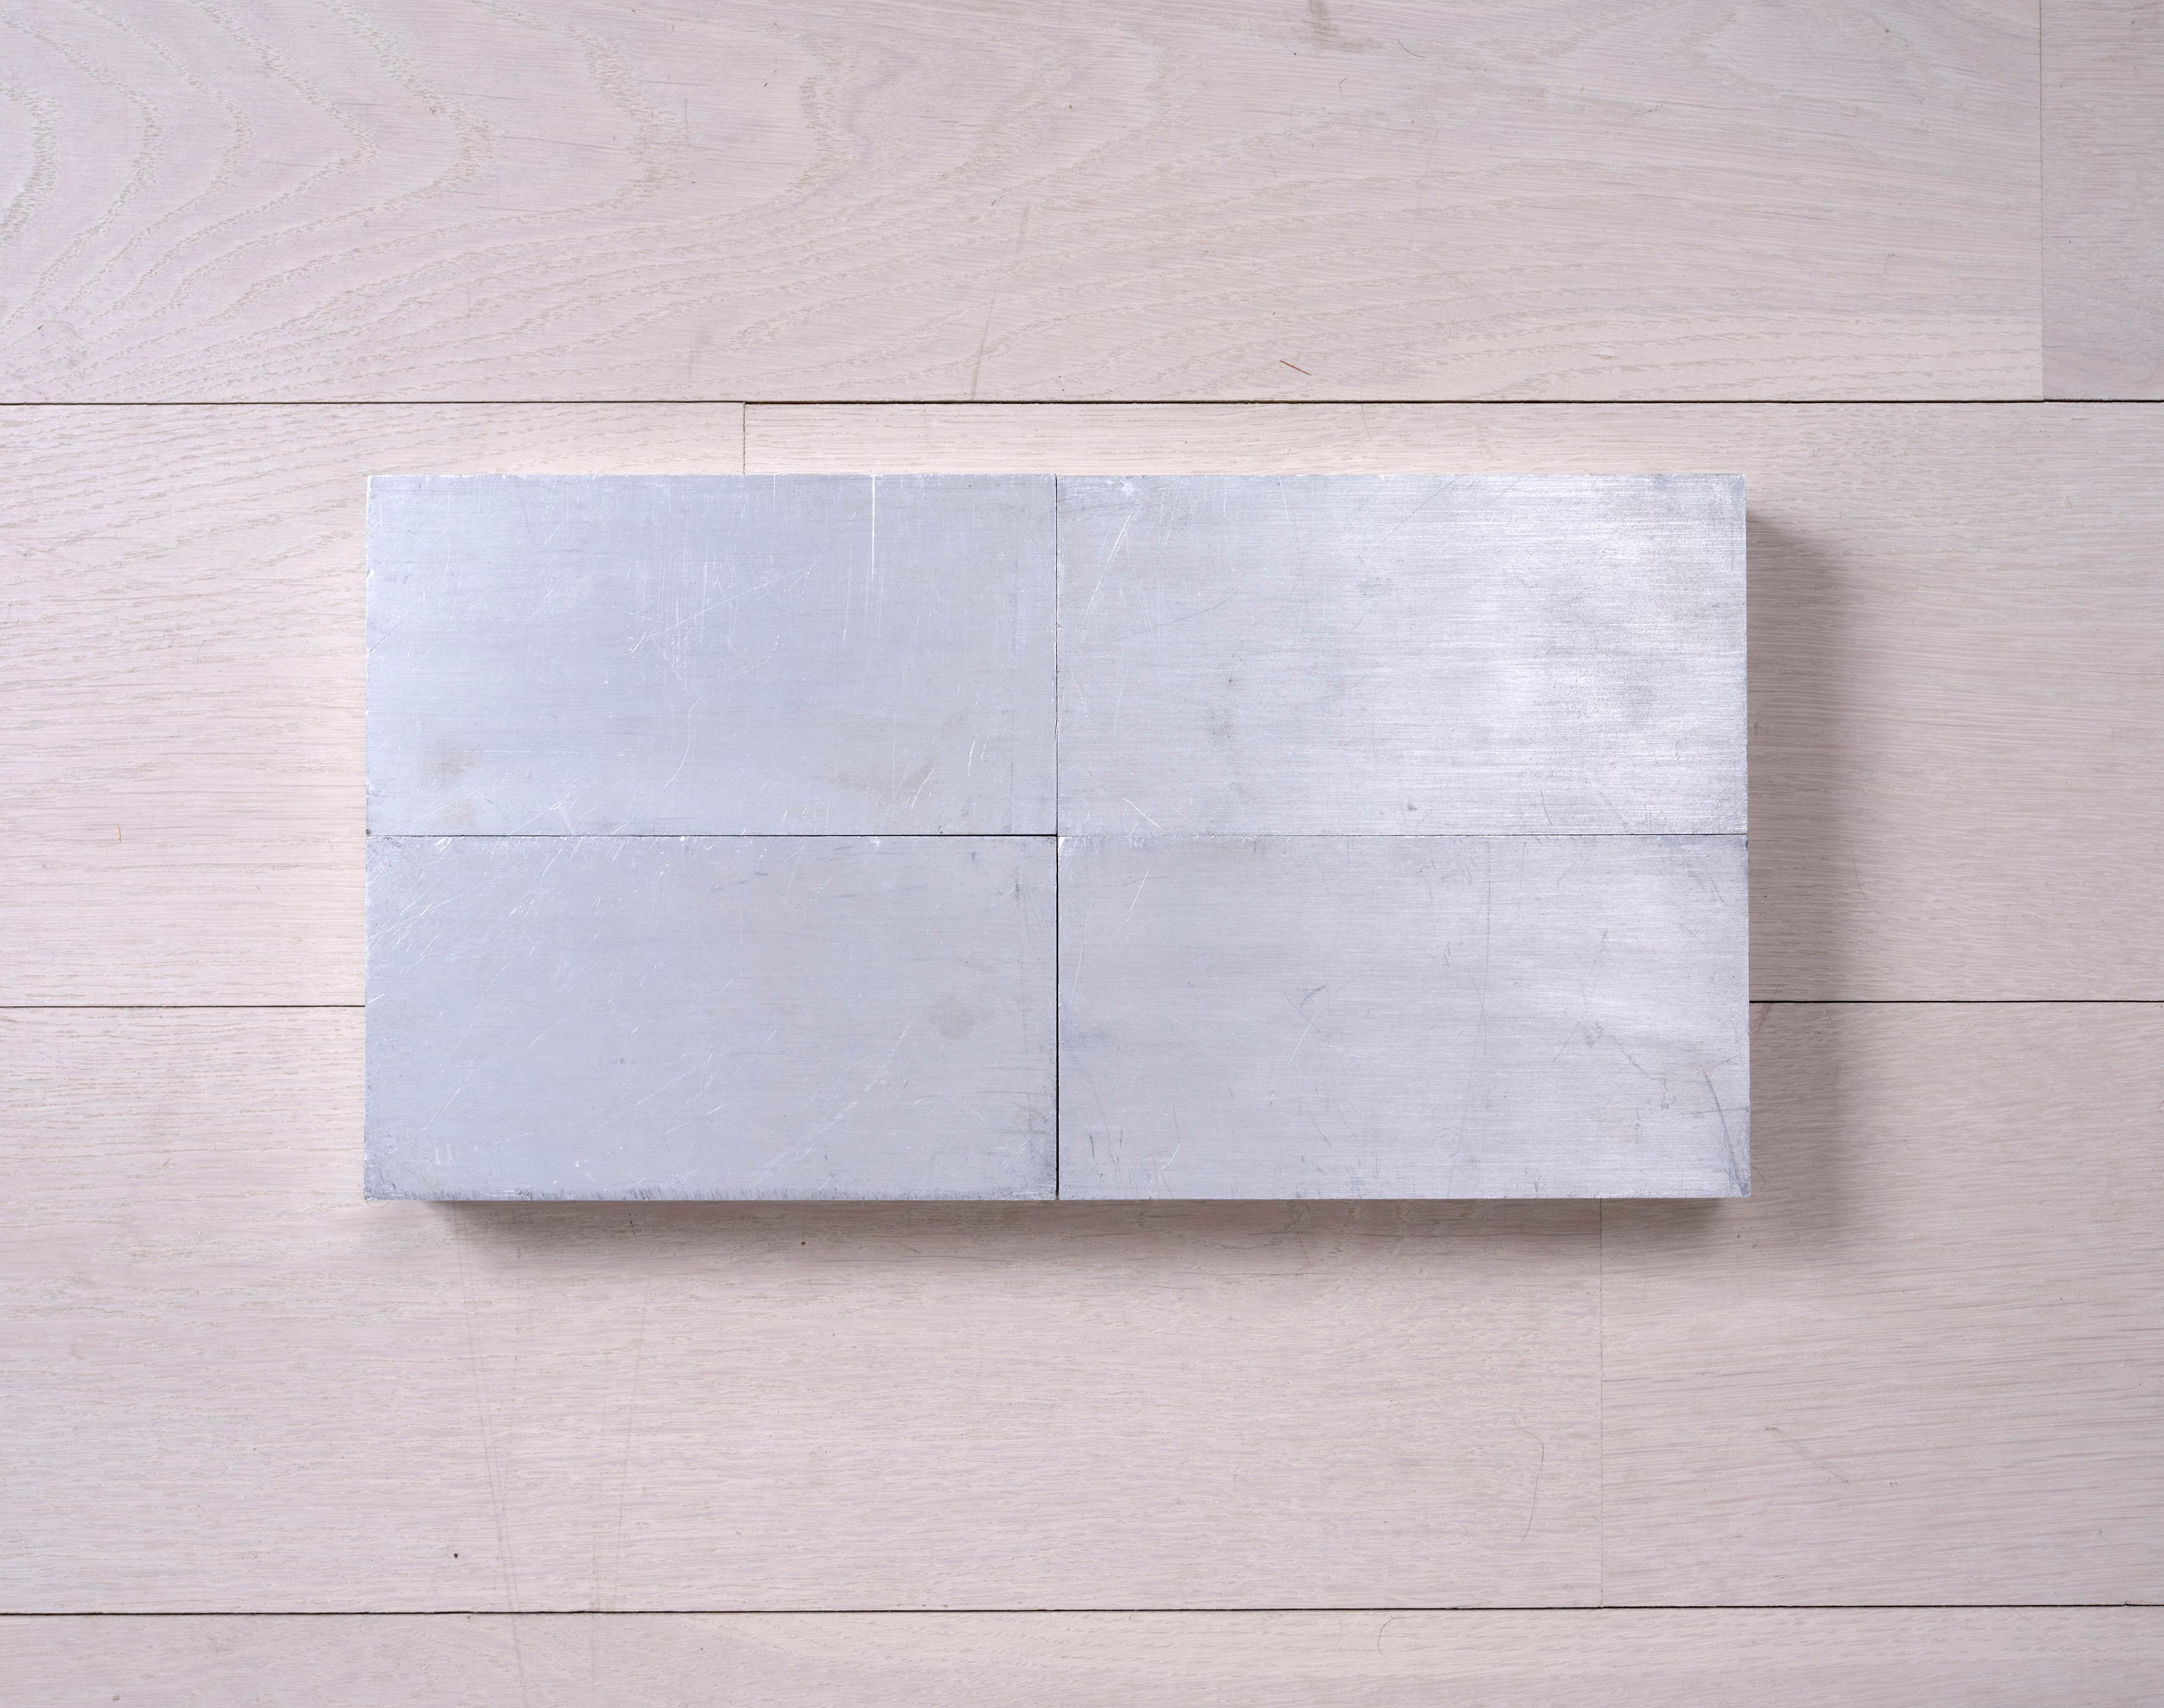 Al 4 Blocks aluminum, in 4 parts - Sculpture by Carl Andre